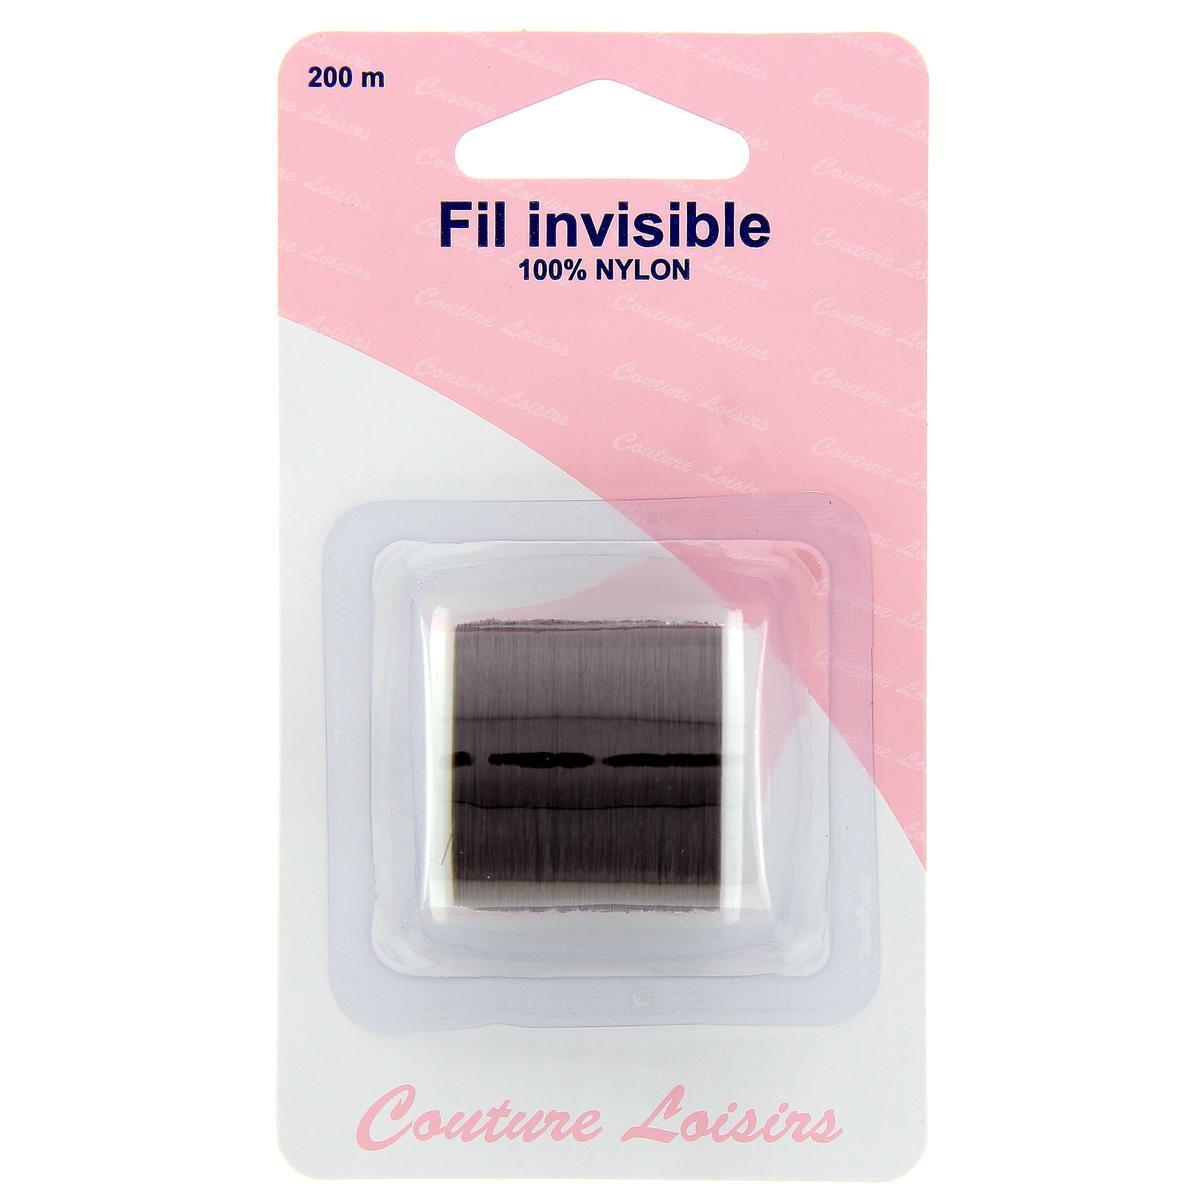 Fil invisible - 100% nylon - 200 m - Noir